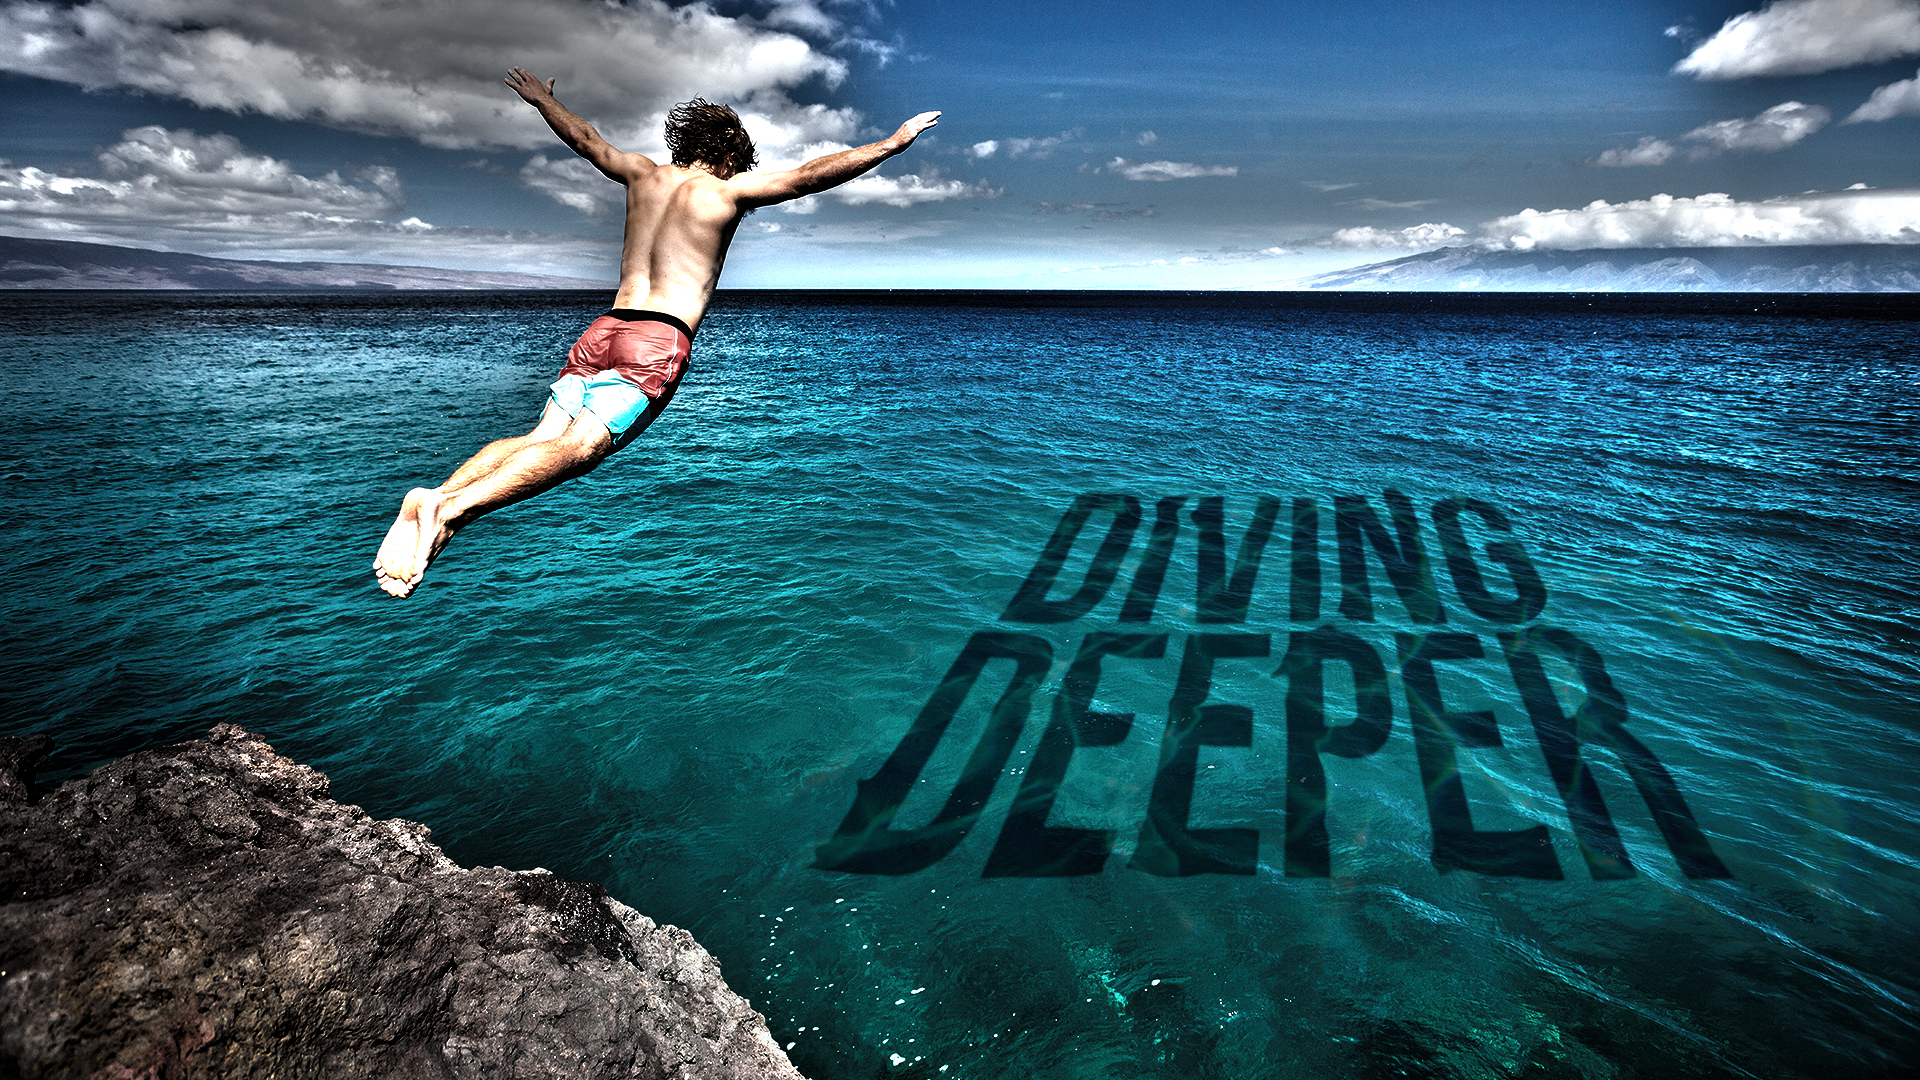 Dive-Deeper-Graphic